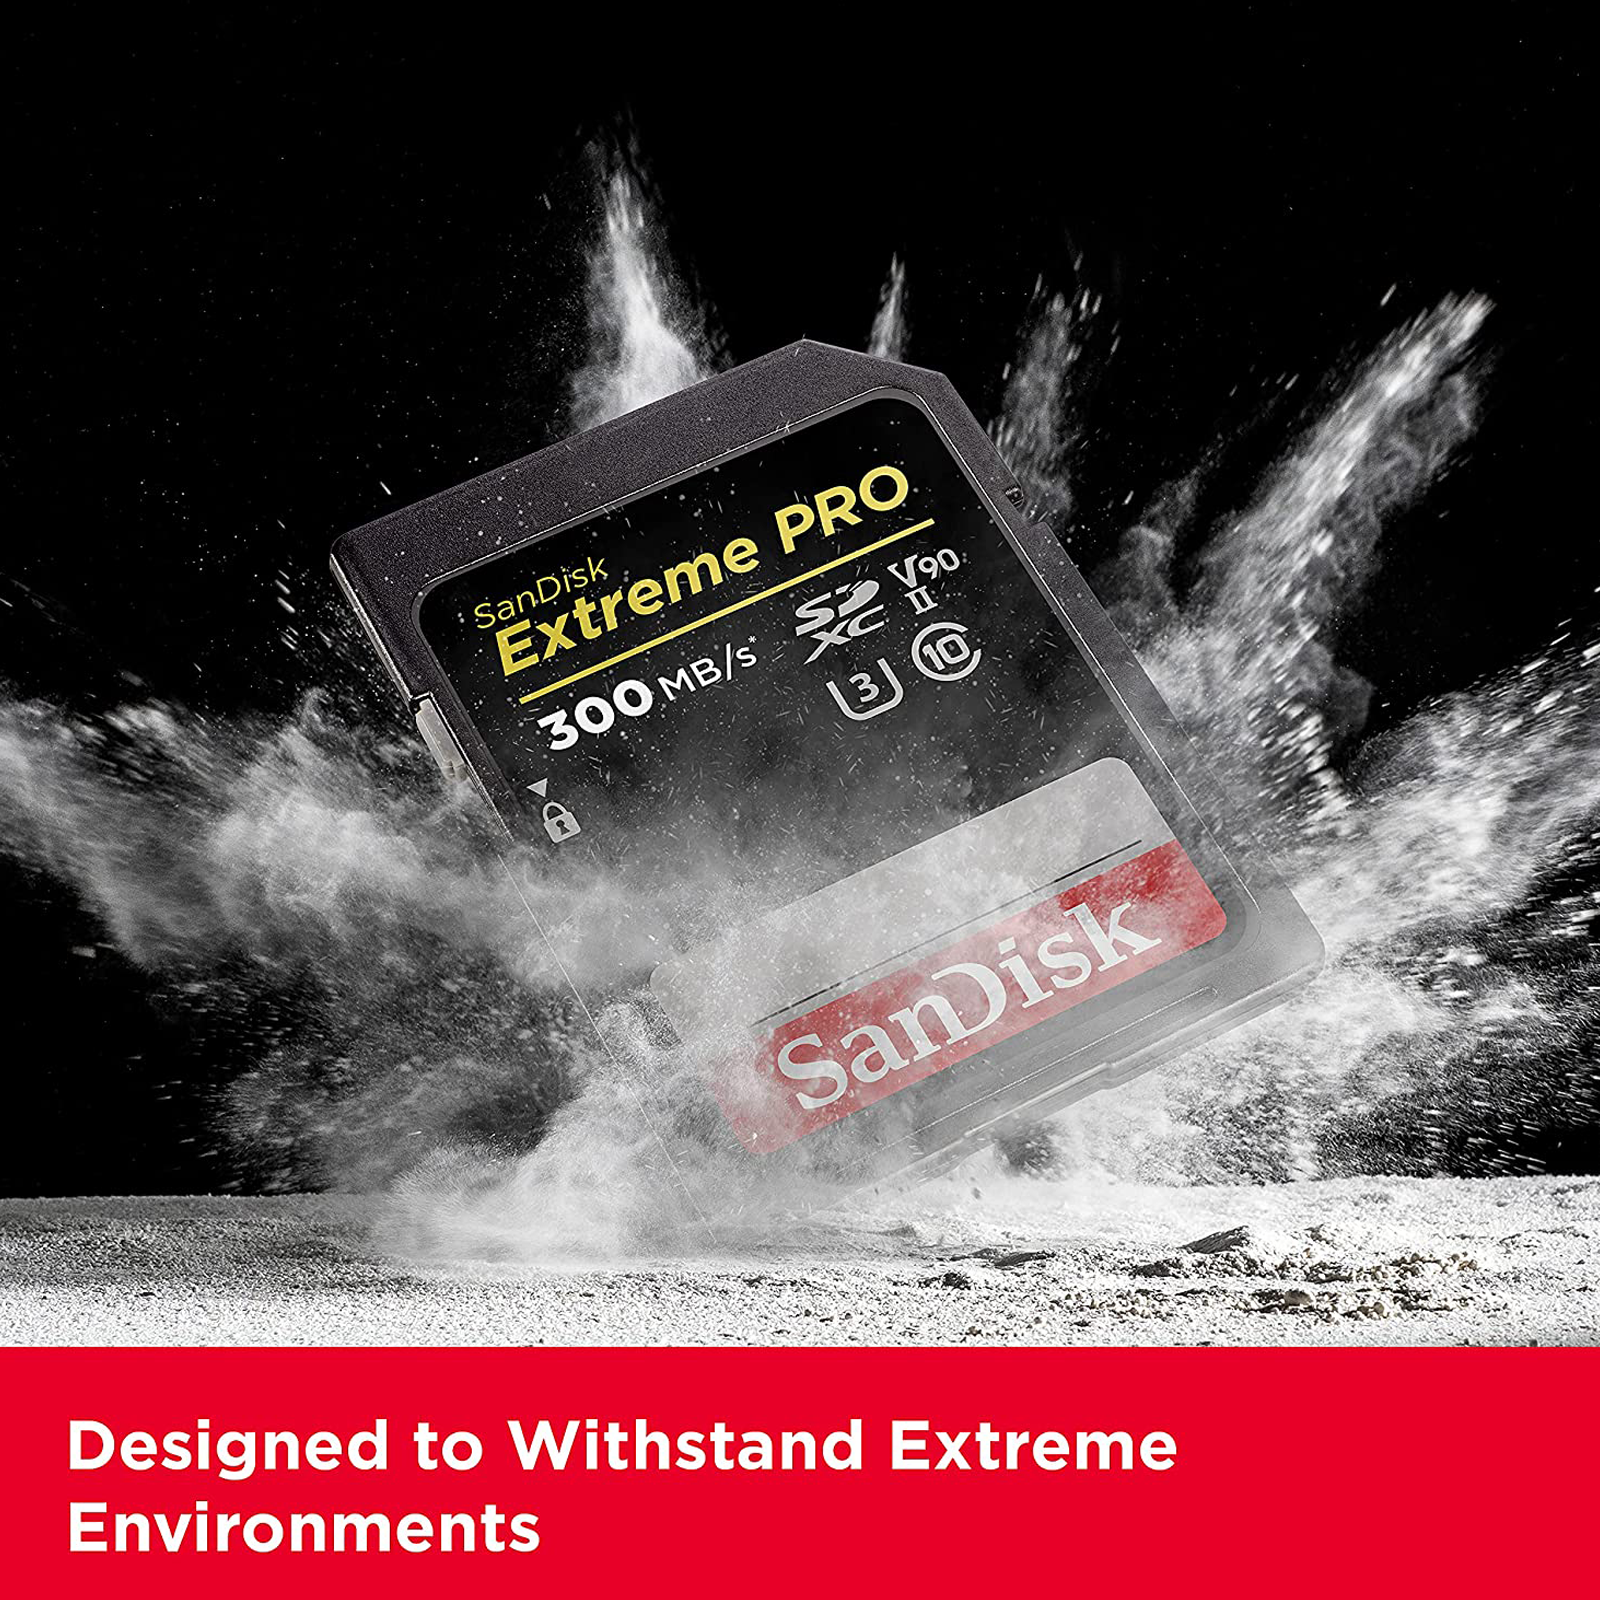 SanDisk Extreme PRO 64 Go SDXC UHS-II Classe 10